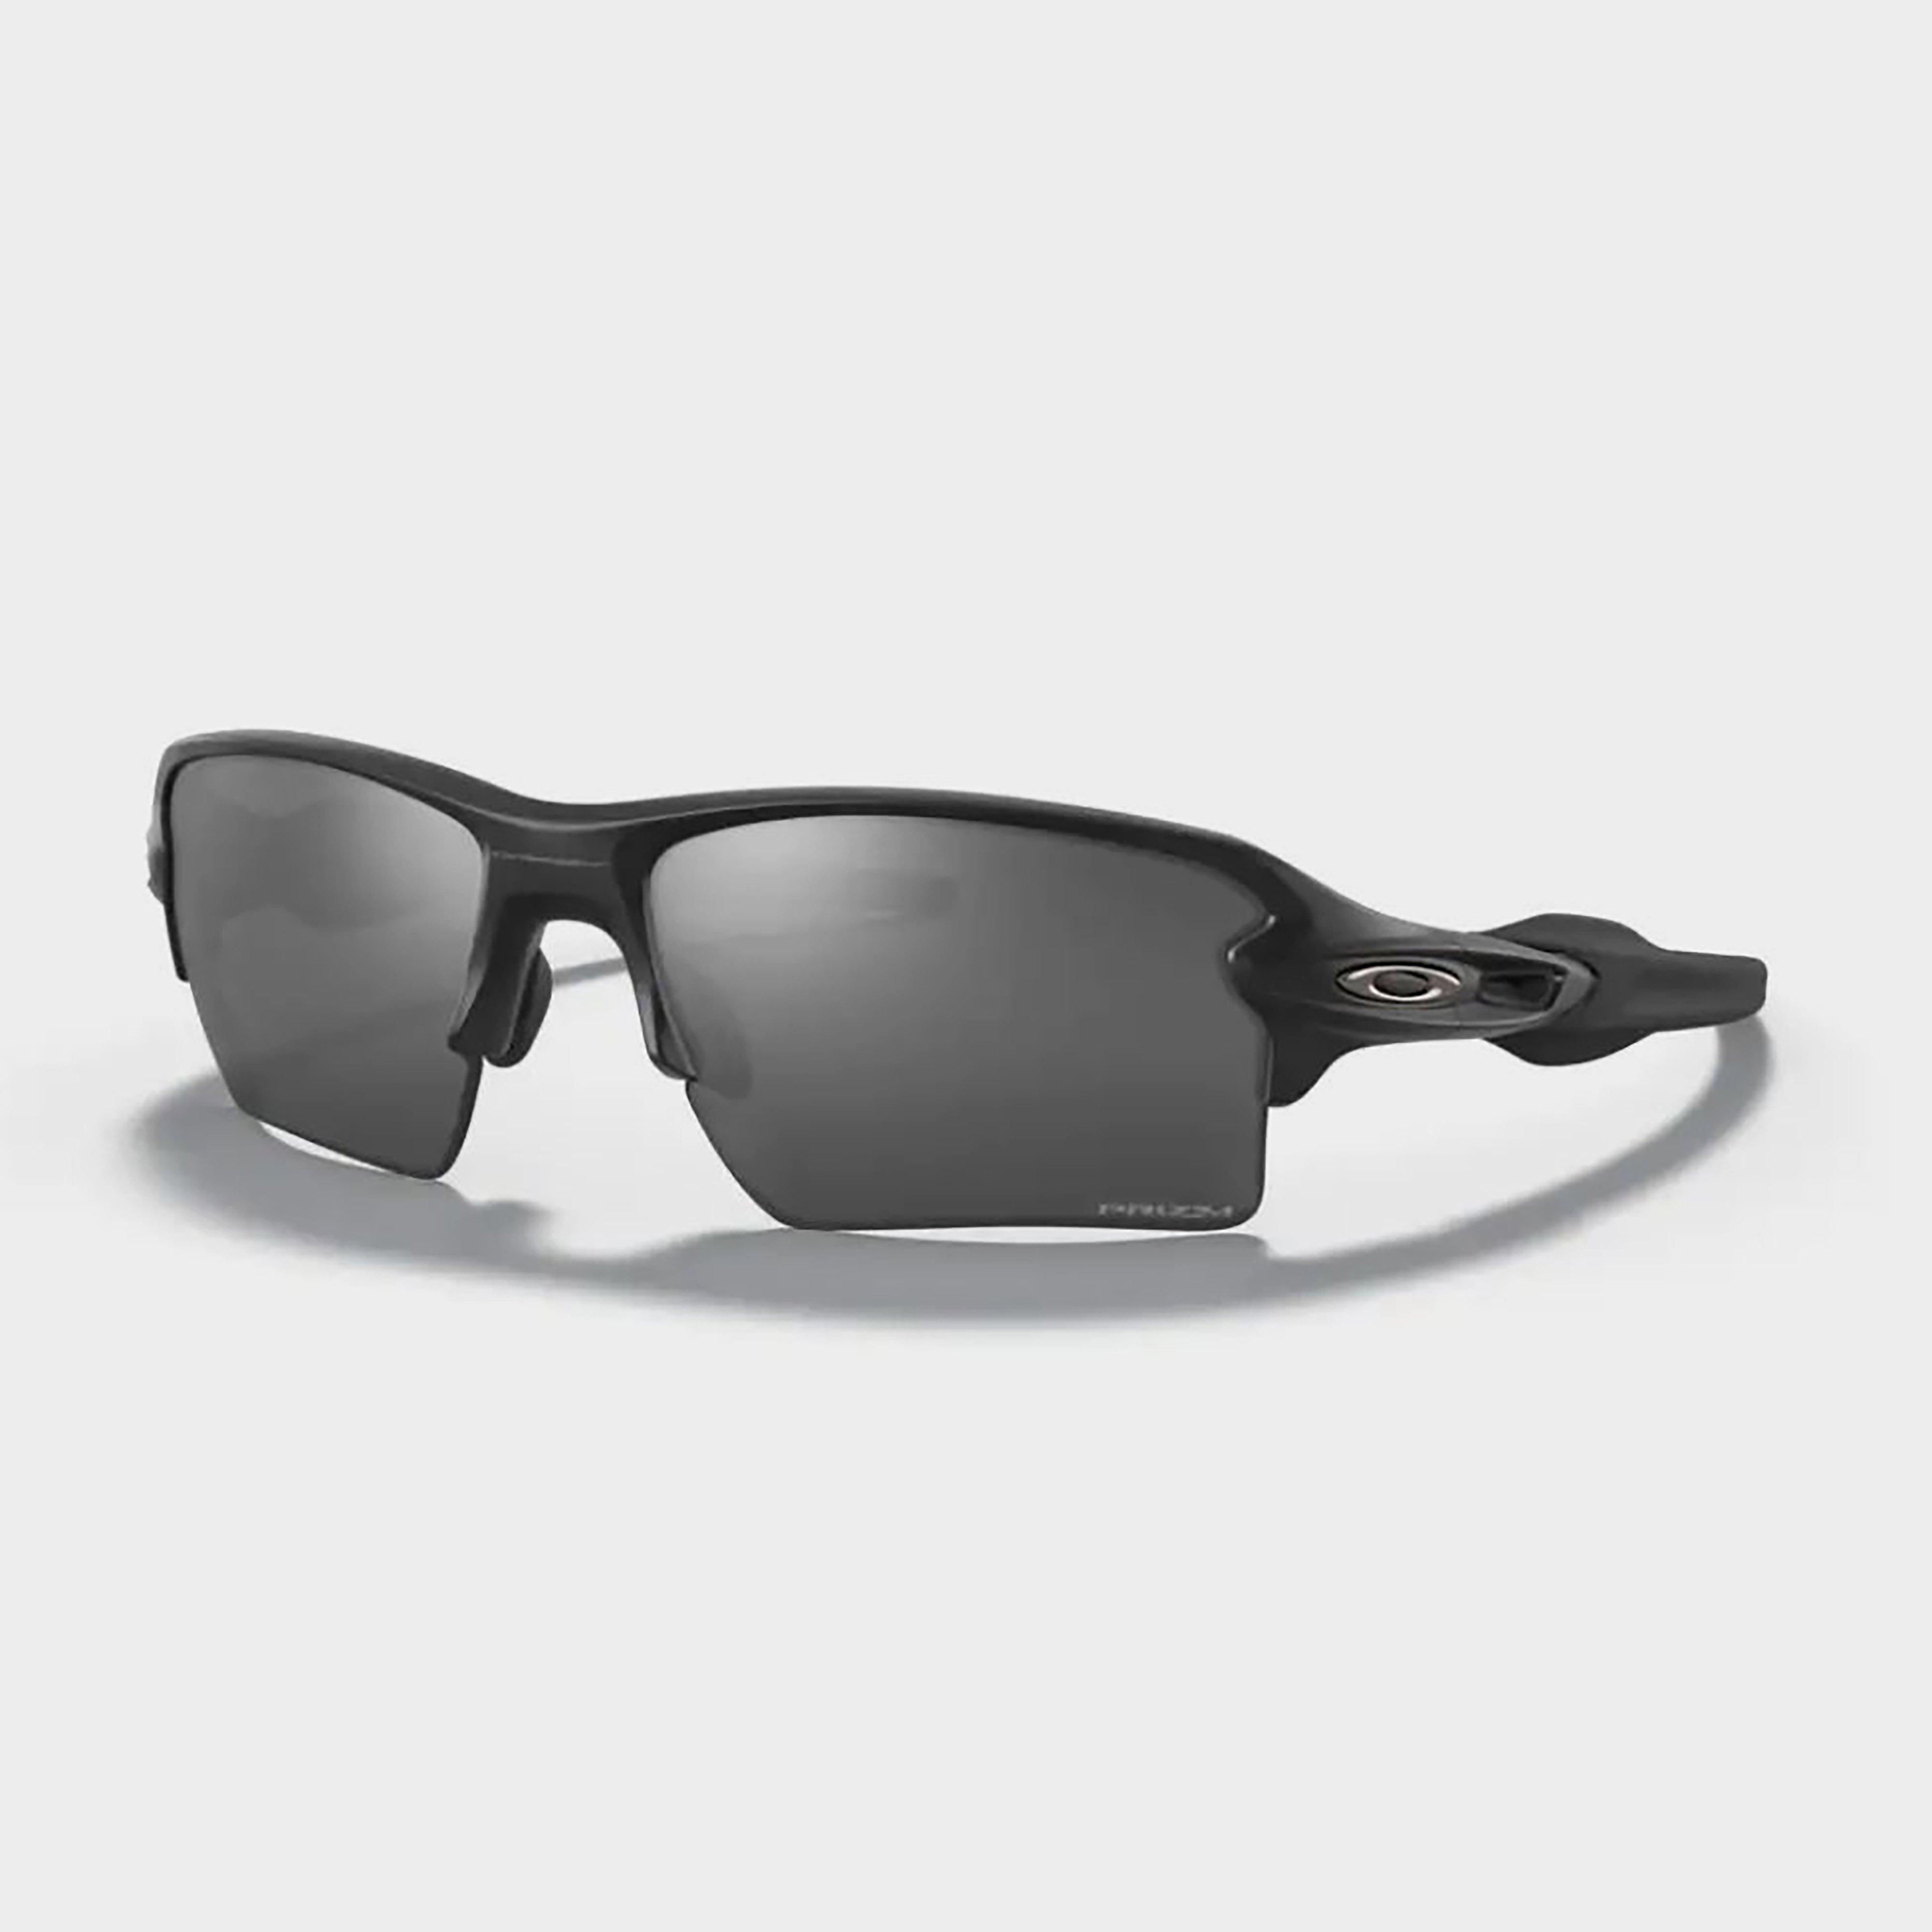  Oakley Unisex Flak 2.0 XL Sunglasses, Grey